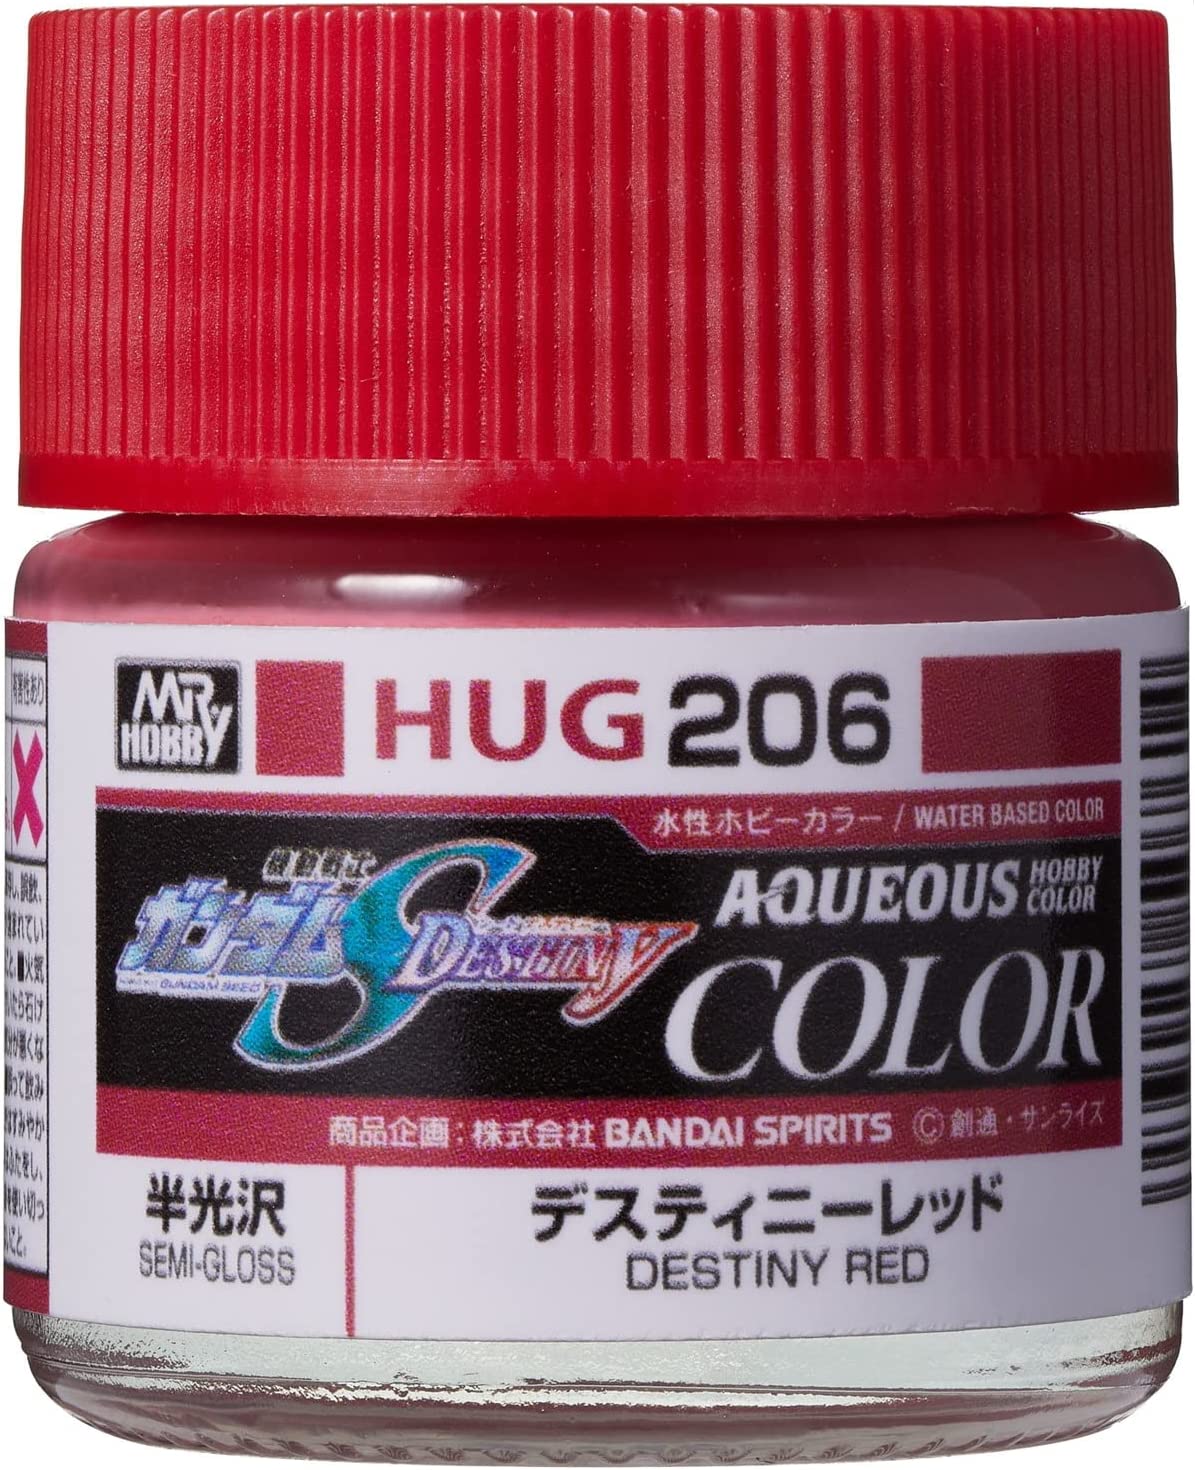 HUG206 Water Based Gundam Color Destiny Red